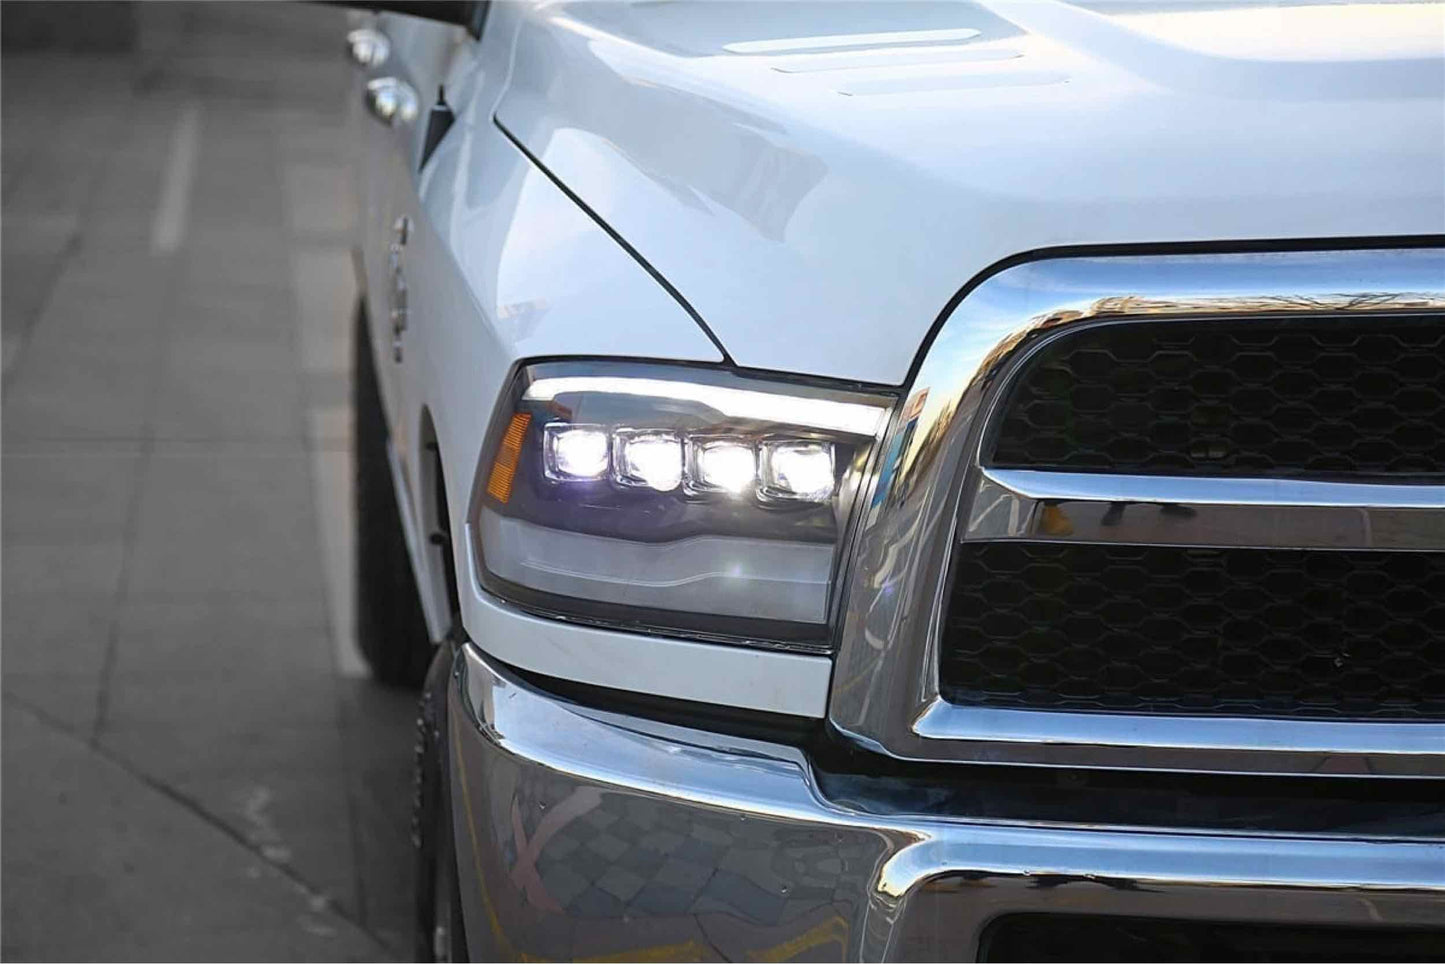 ARex Nova LED Headlights: Dodge Ram (09-18) - Chrome (Set)